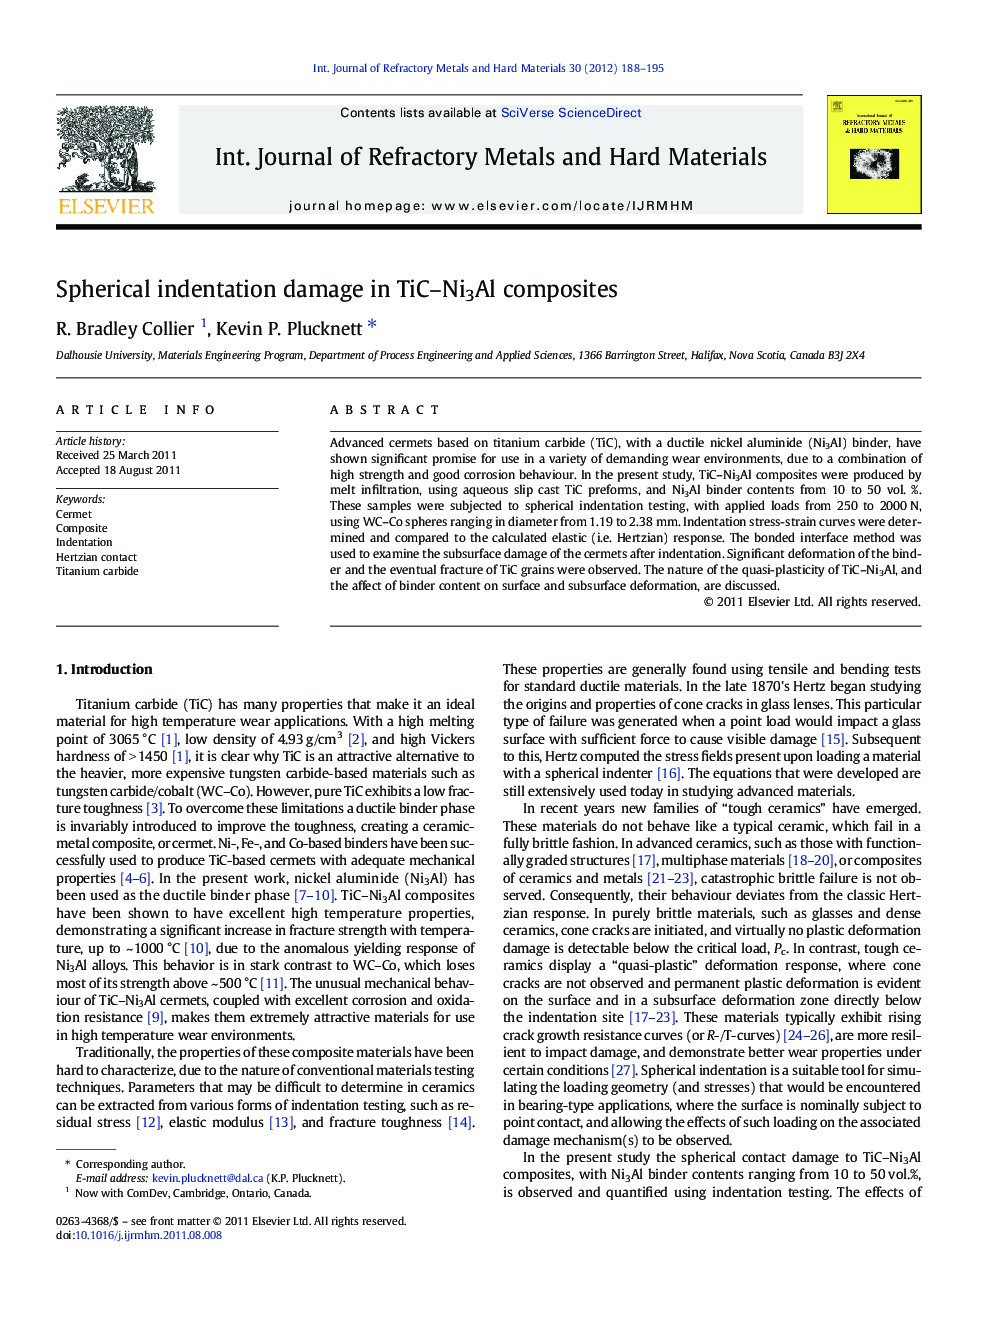 Spherical indentation damage in TiC–Ni3Al composites